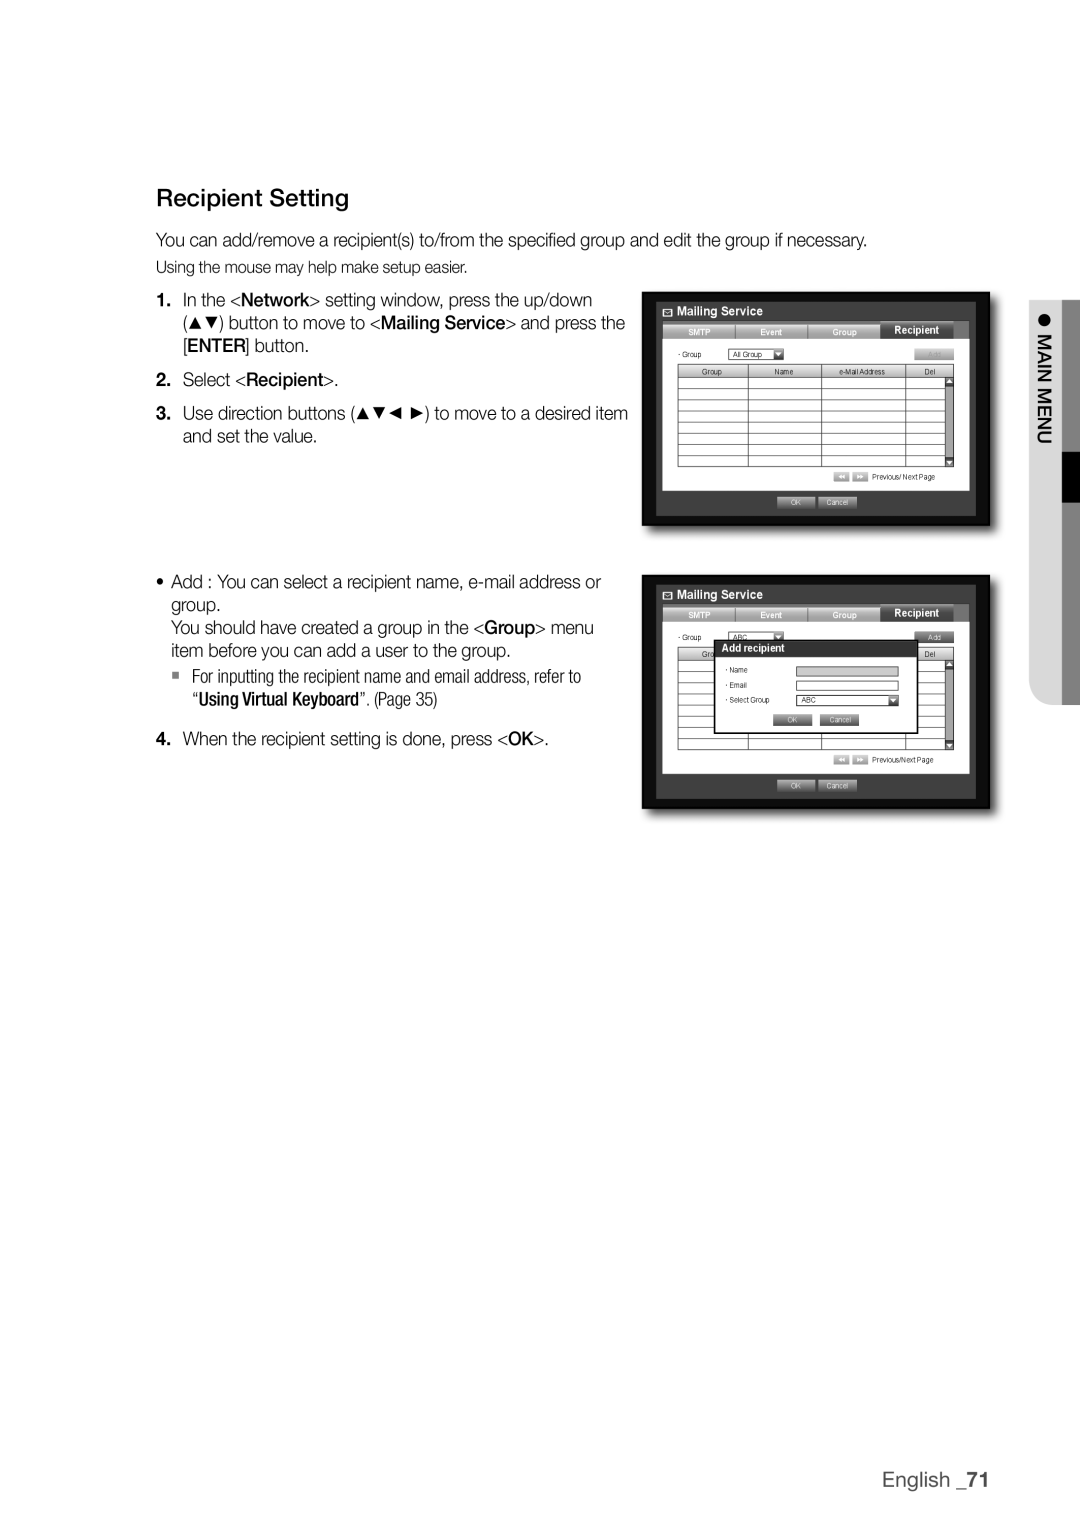 Samsung SDR3100 user manual Recipient Setting, English _71 